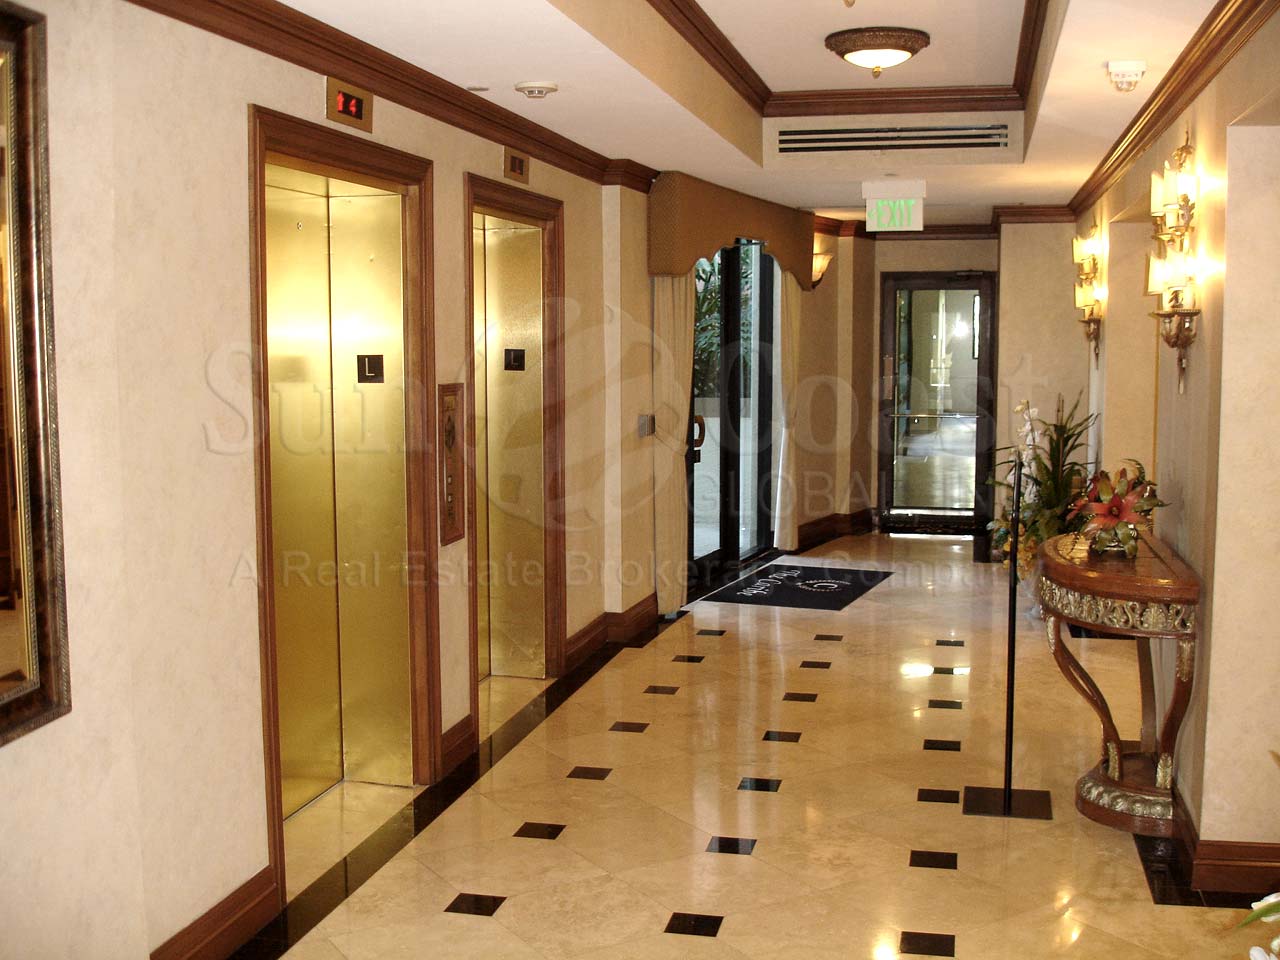 Caribe Lobby and Elevator